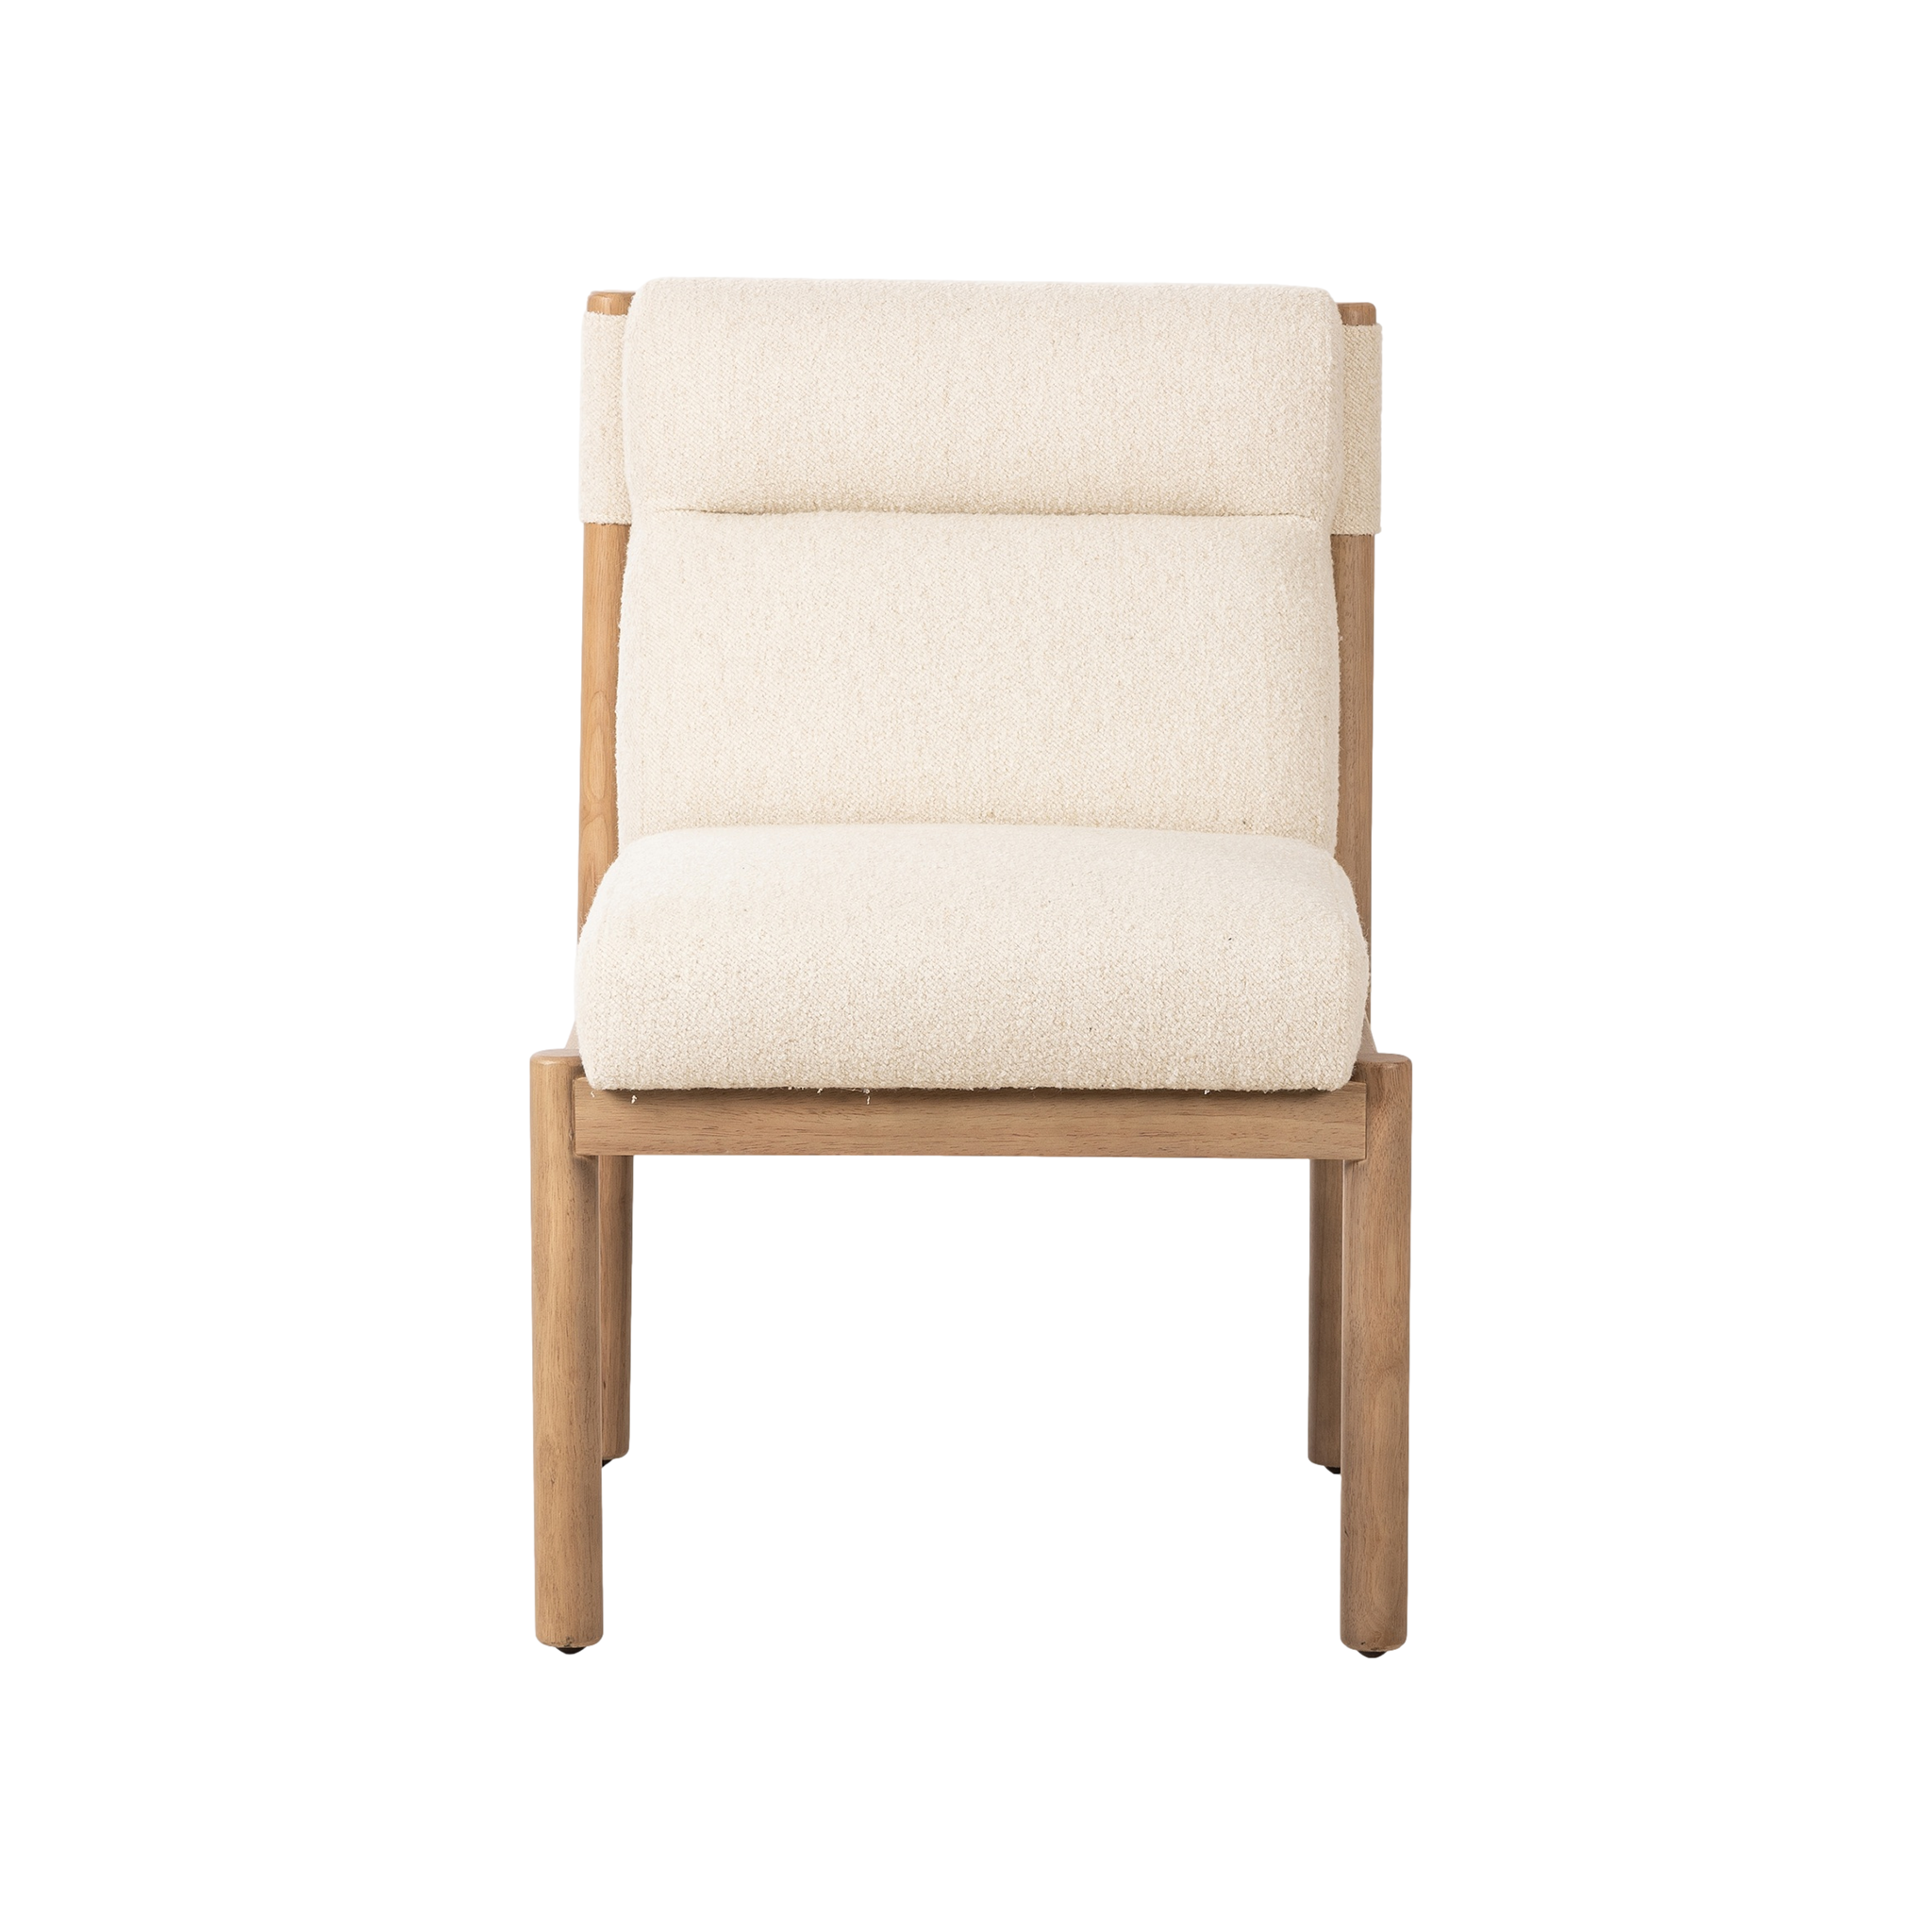 Kiano Dining Chair in Oatmeal